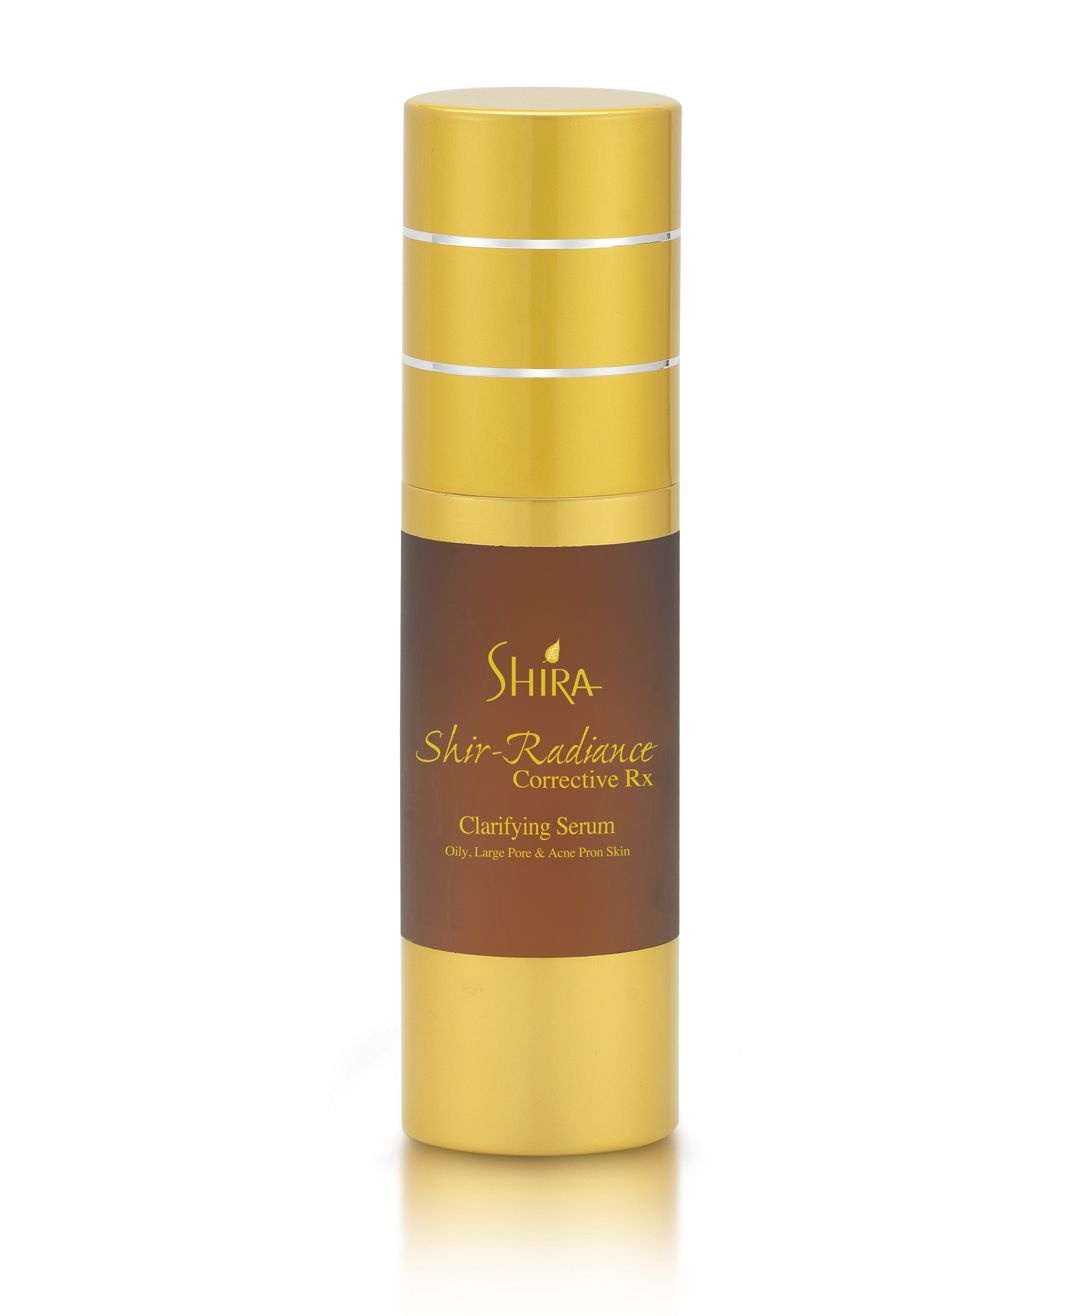 Shira Shir-Radiance Corrective RX Clarifying Serum